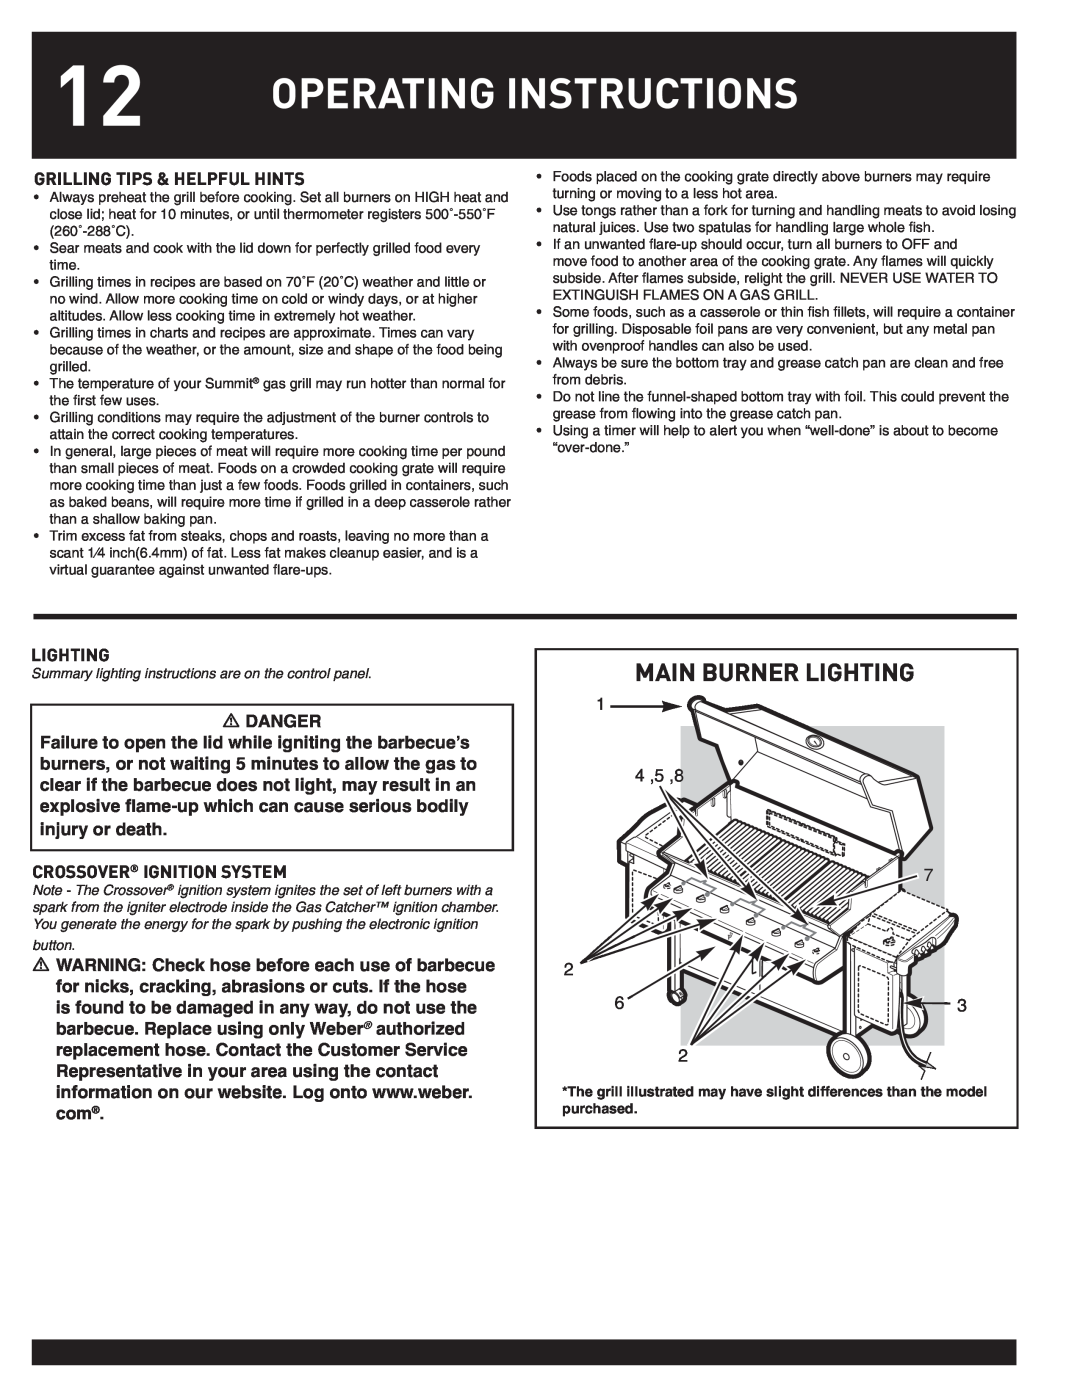 Weber SUMMIT manual Main Burner Lighting, Operating Instructions 